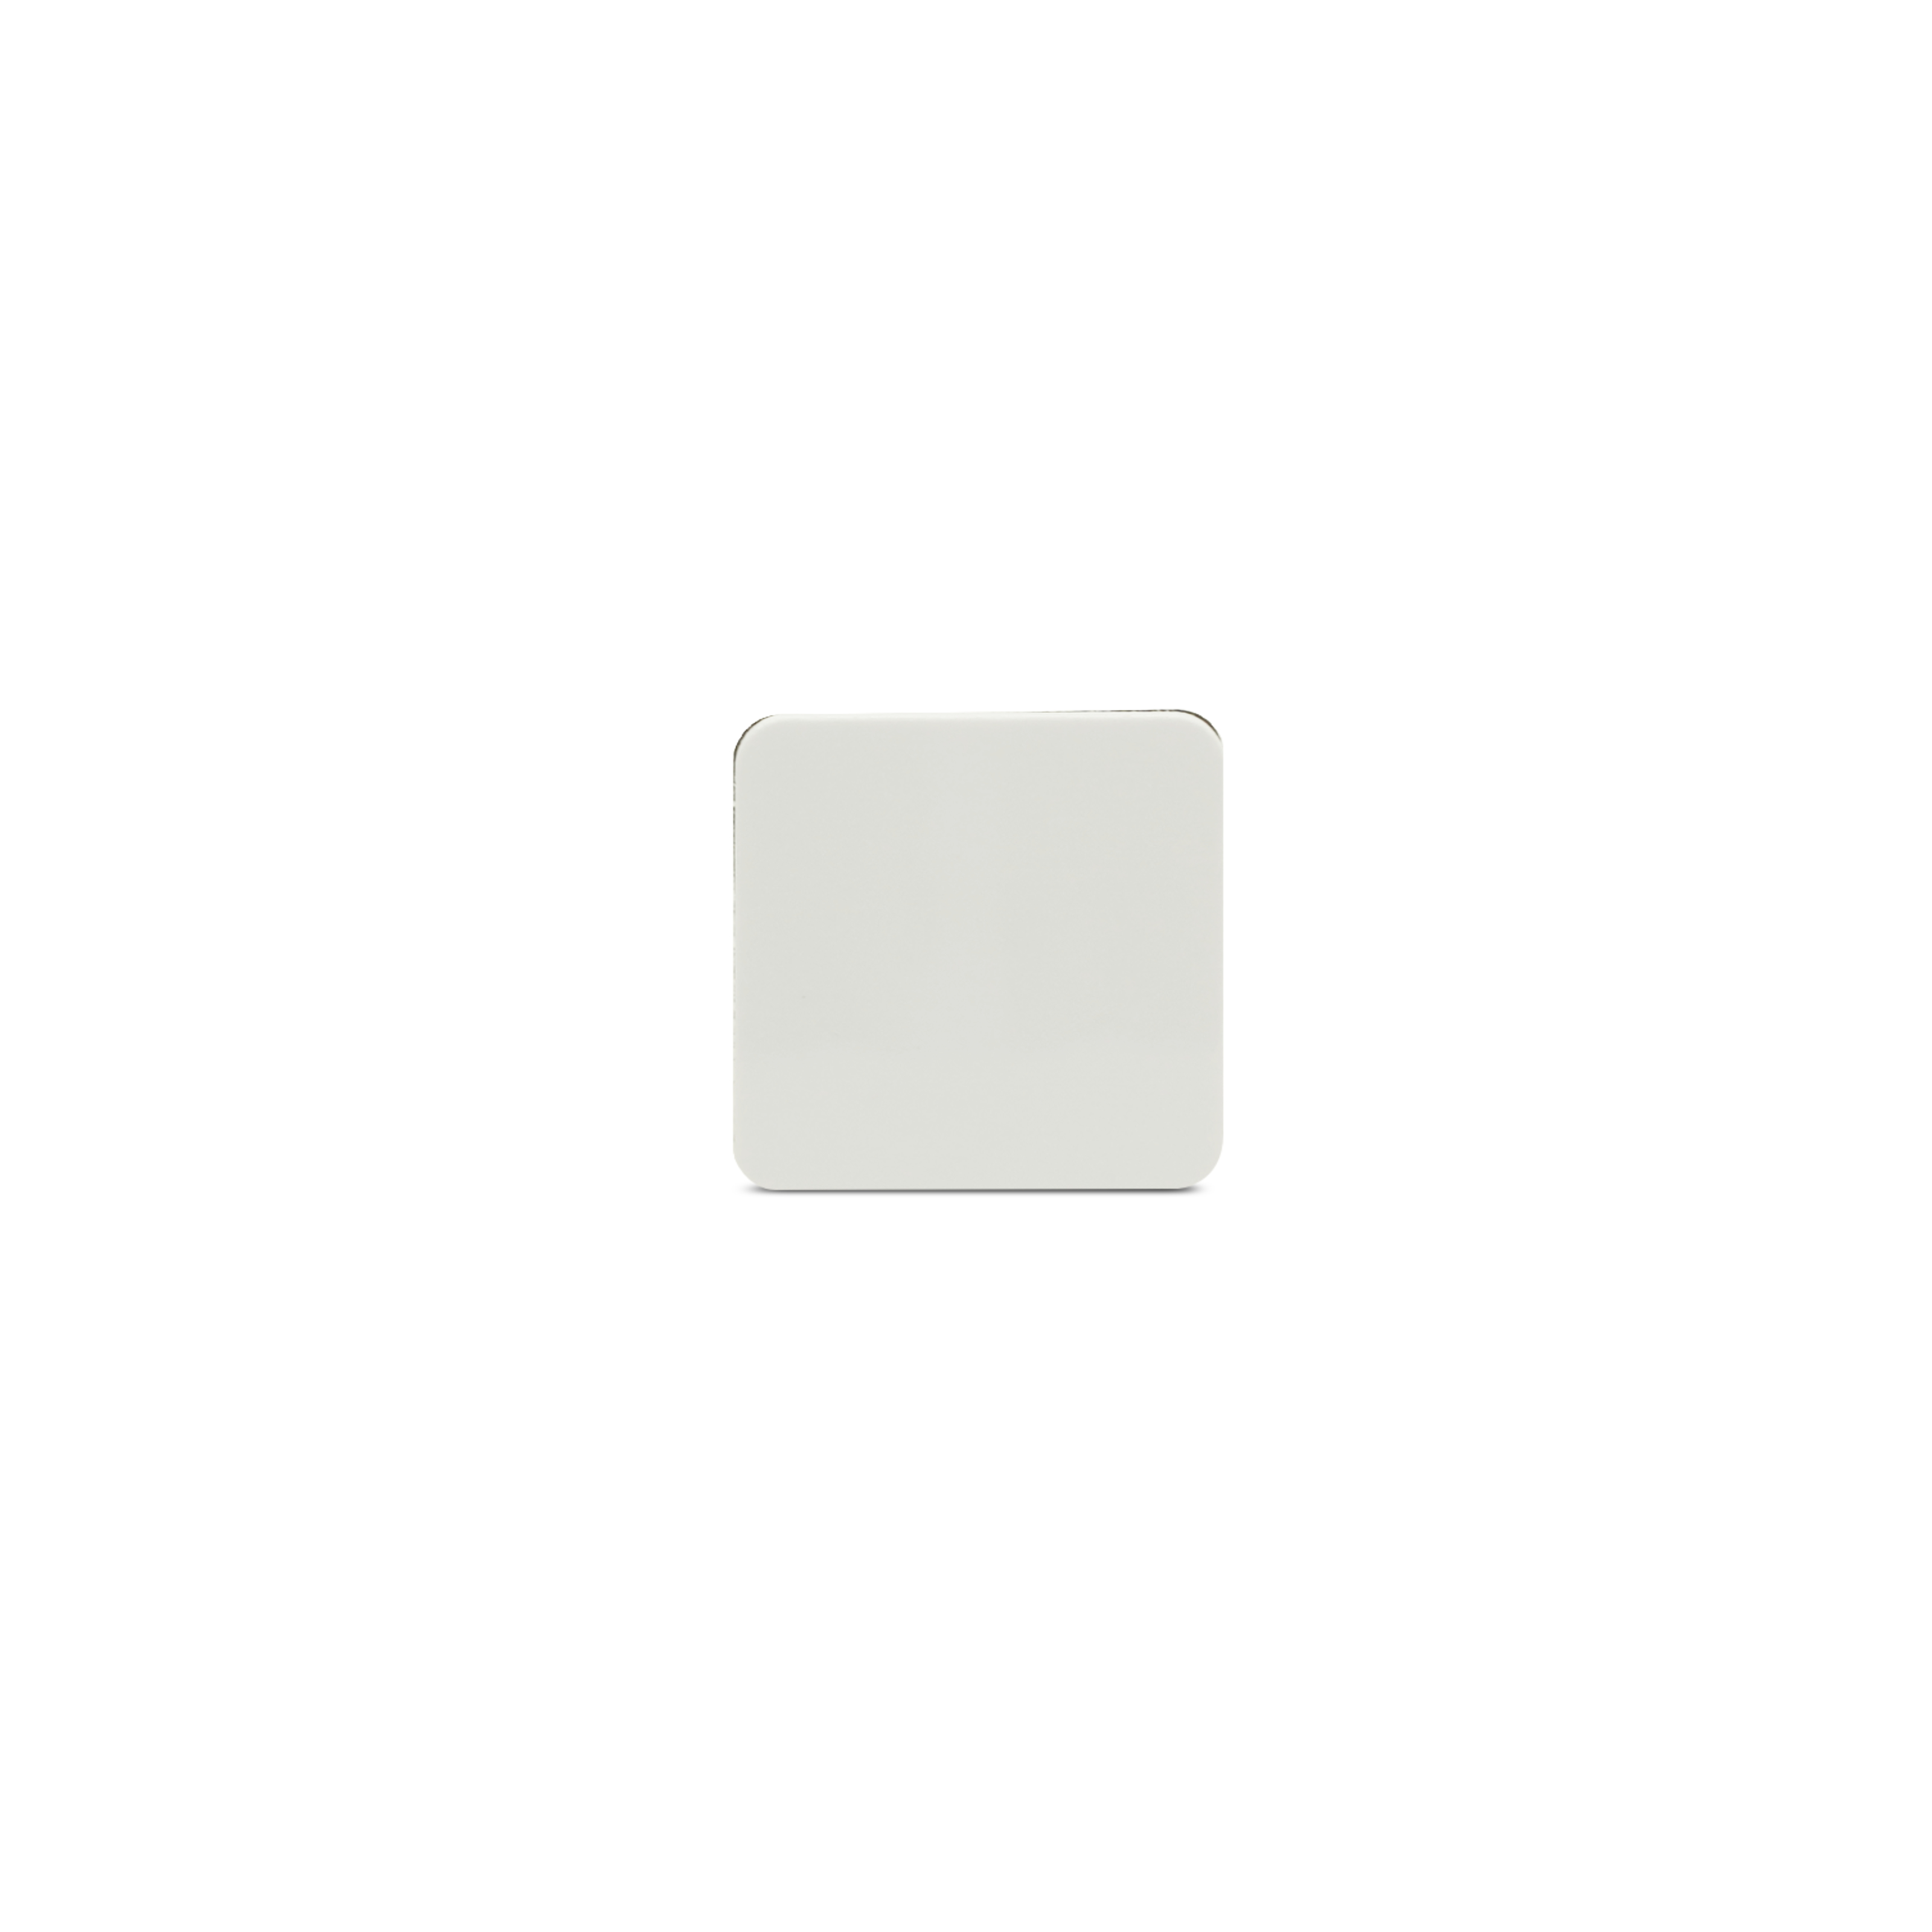 NFC Sticker PVC - On-Metal - 19 x 19 mm - NTAG213 - 180 Byte - weiß